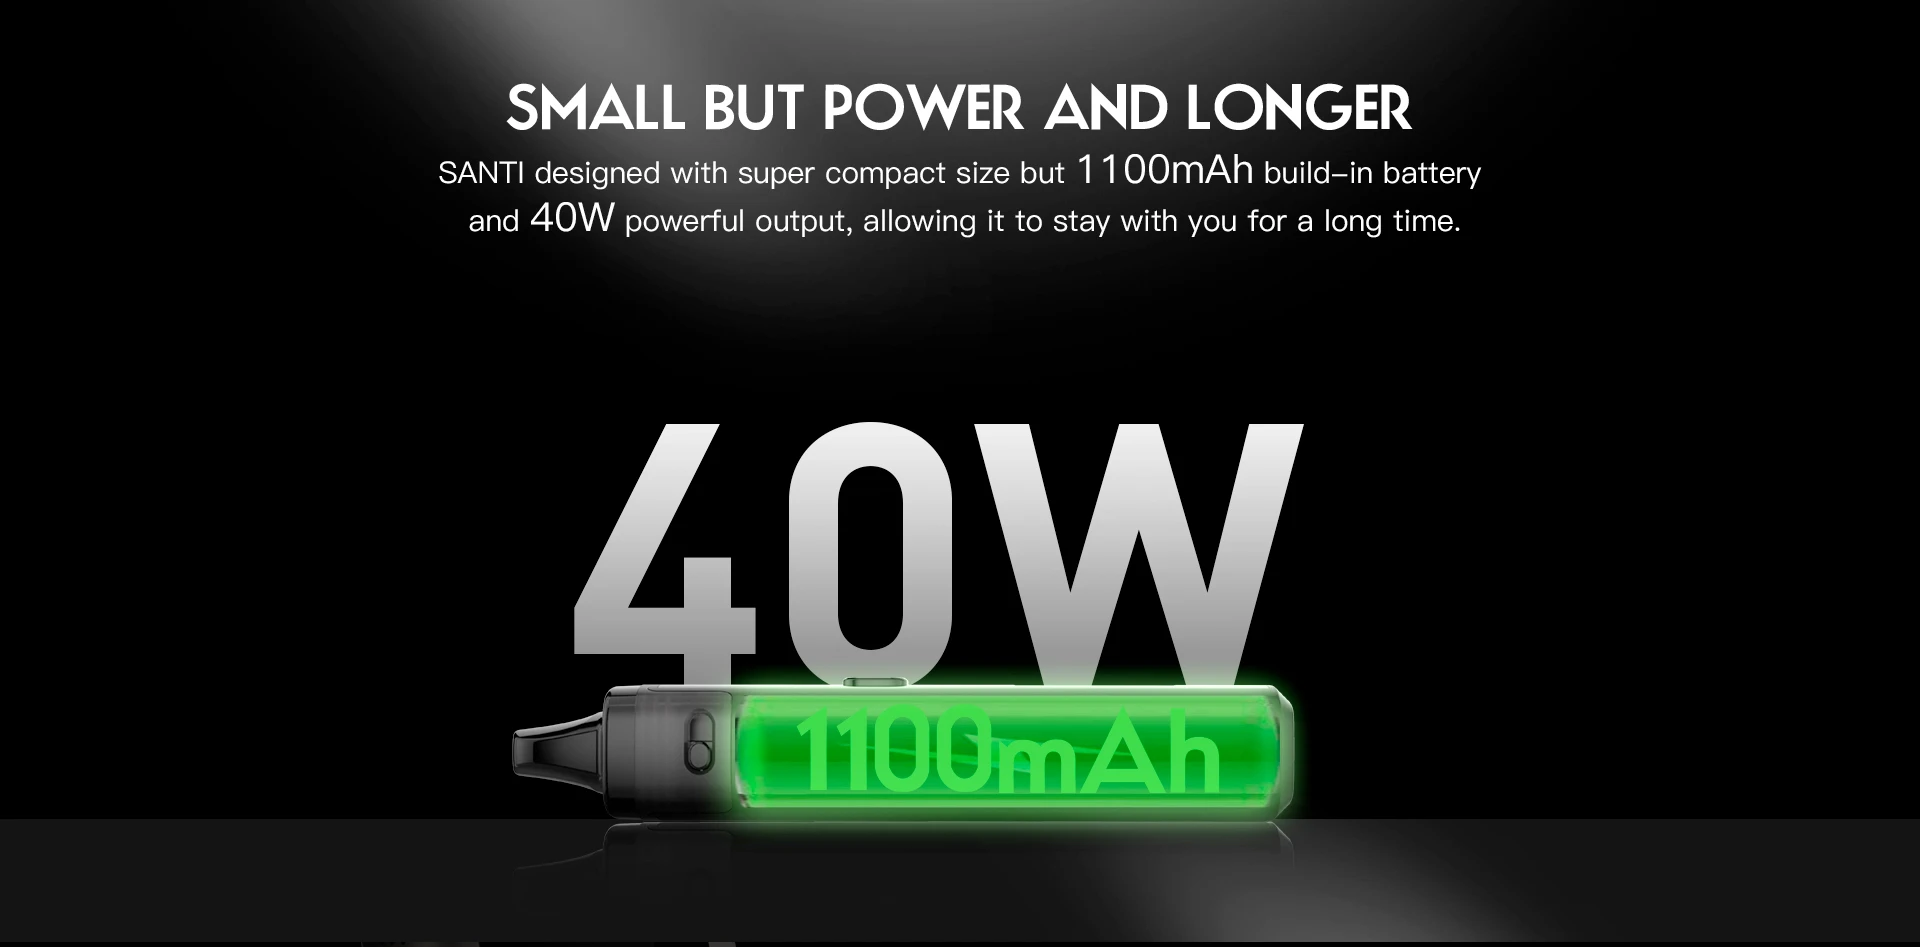 Tanio Oryginalny Smoant SANTI Kit 40W Vape 1100mAh bateria 3.5ML sklep